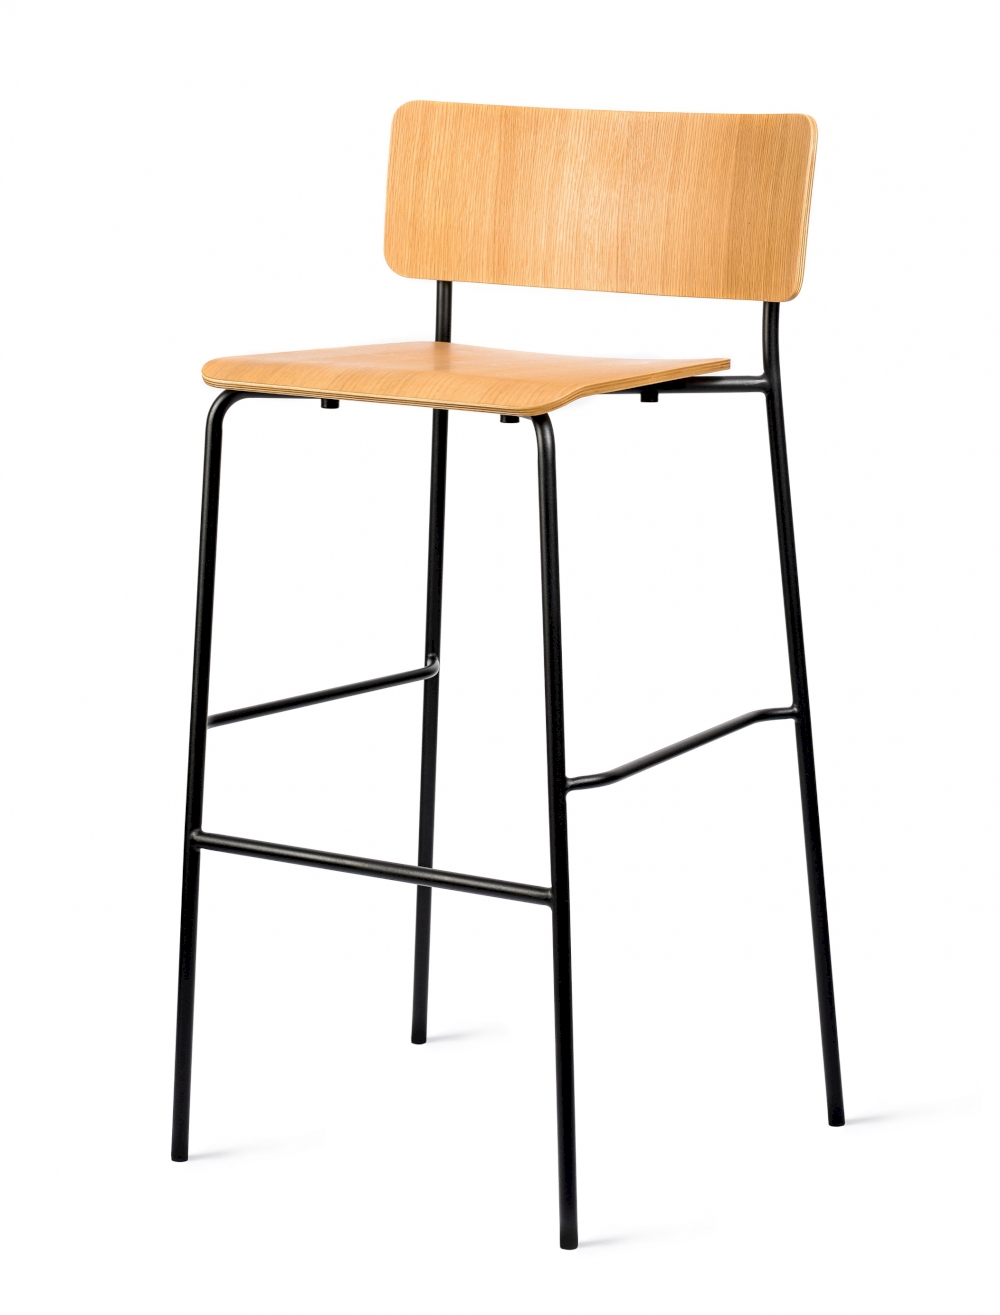 Mi stool metal base bar stool & counter stool. Designed for Dohaus by Mikko Laakkonen.